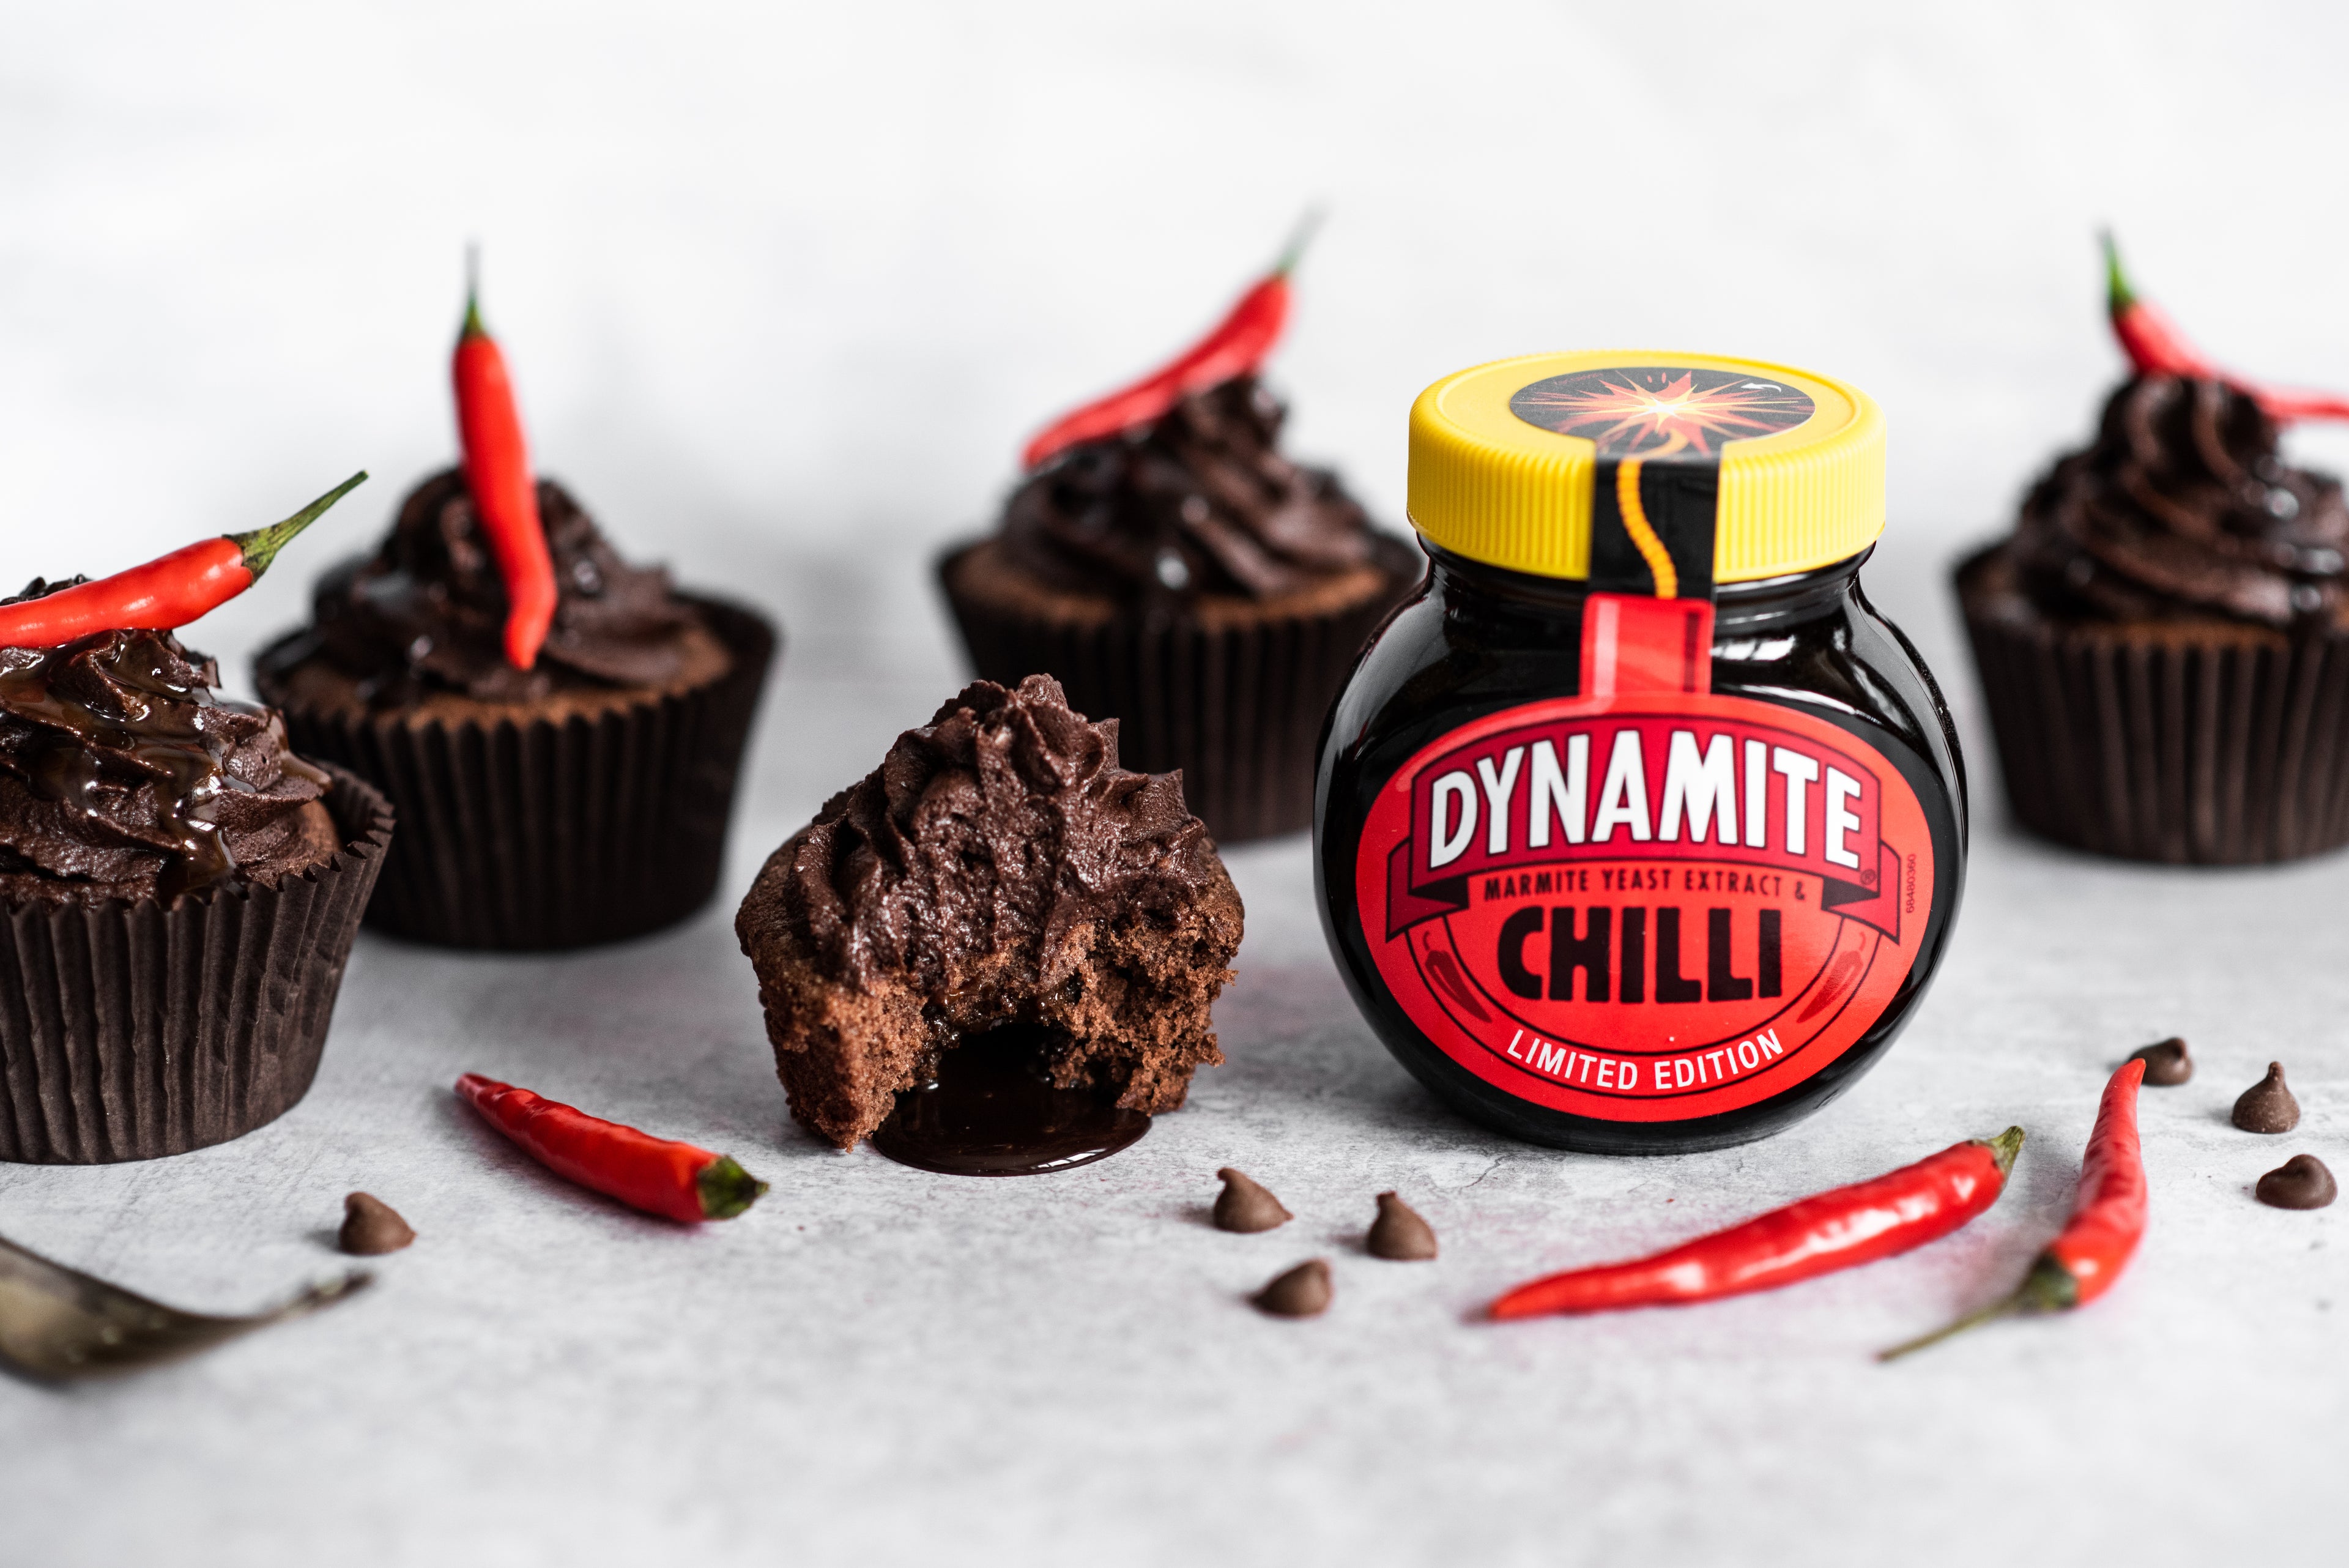 Chilli Chocolate Cupcakes next to dynamite chilli jar